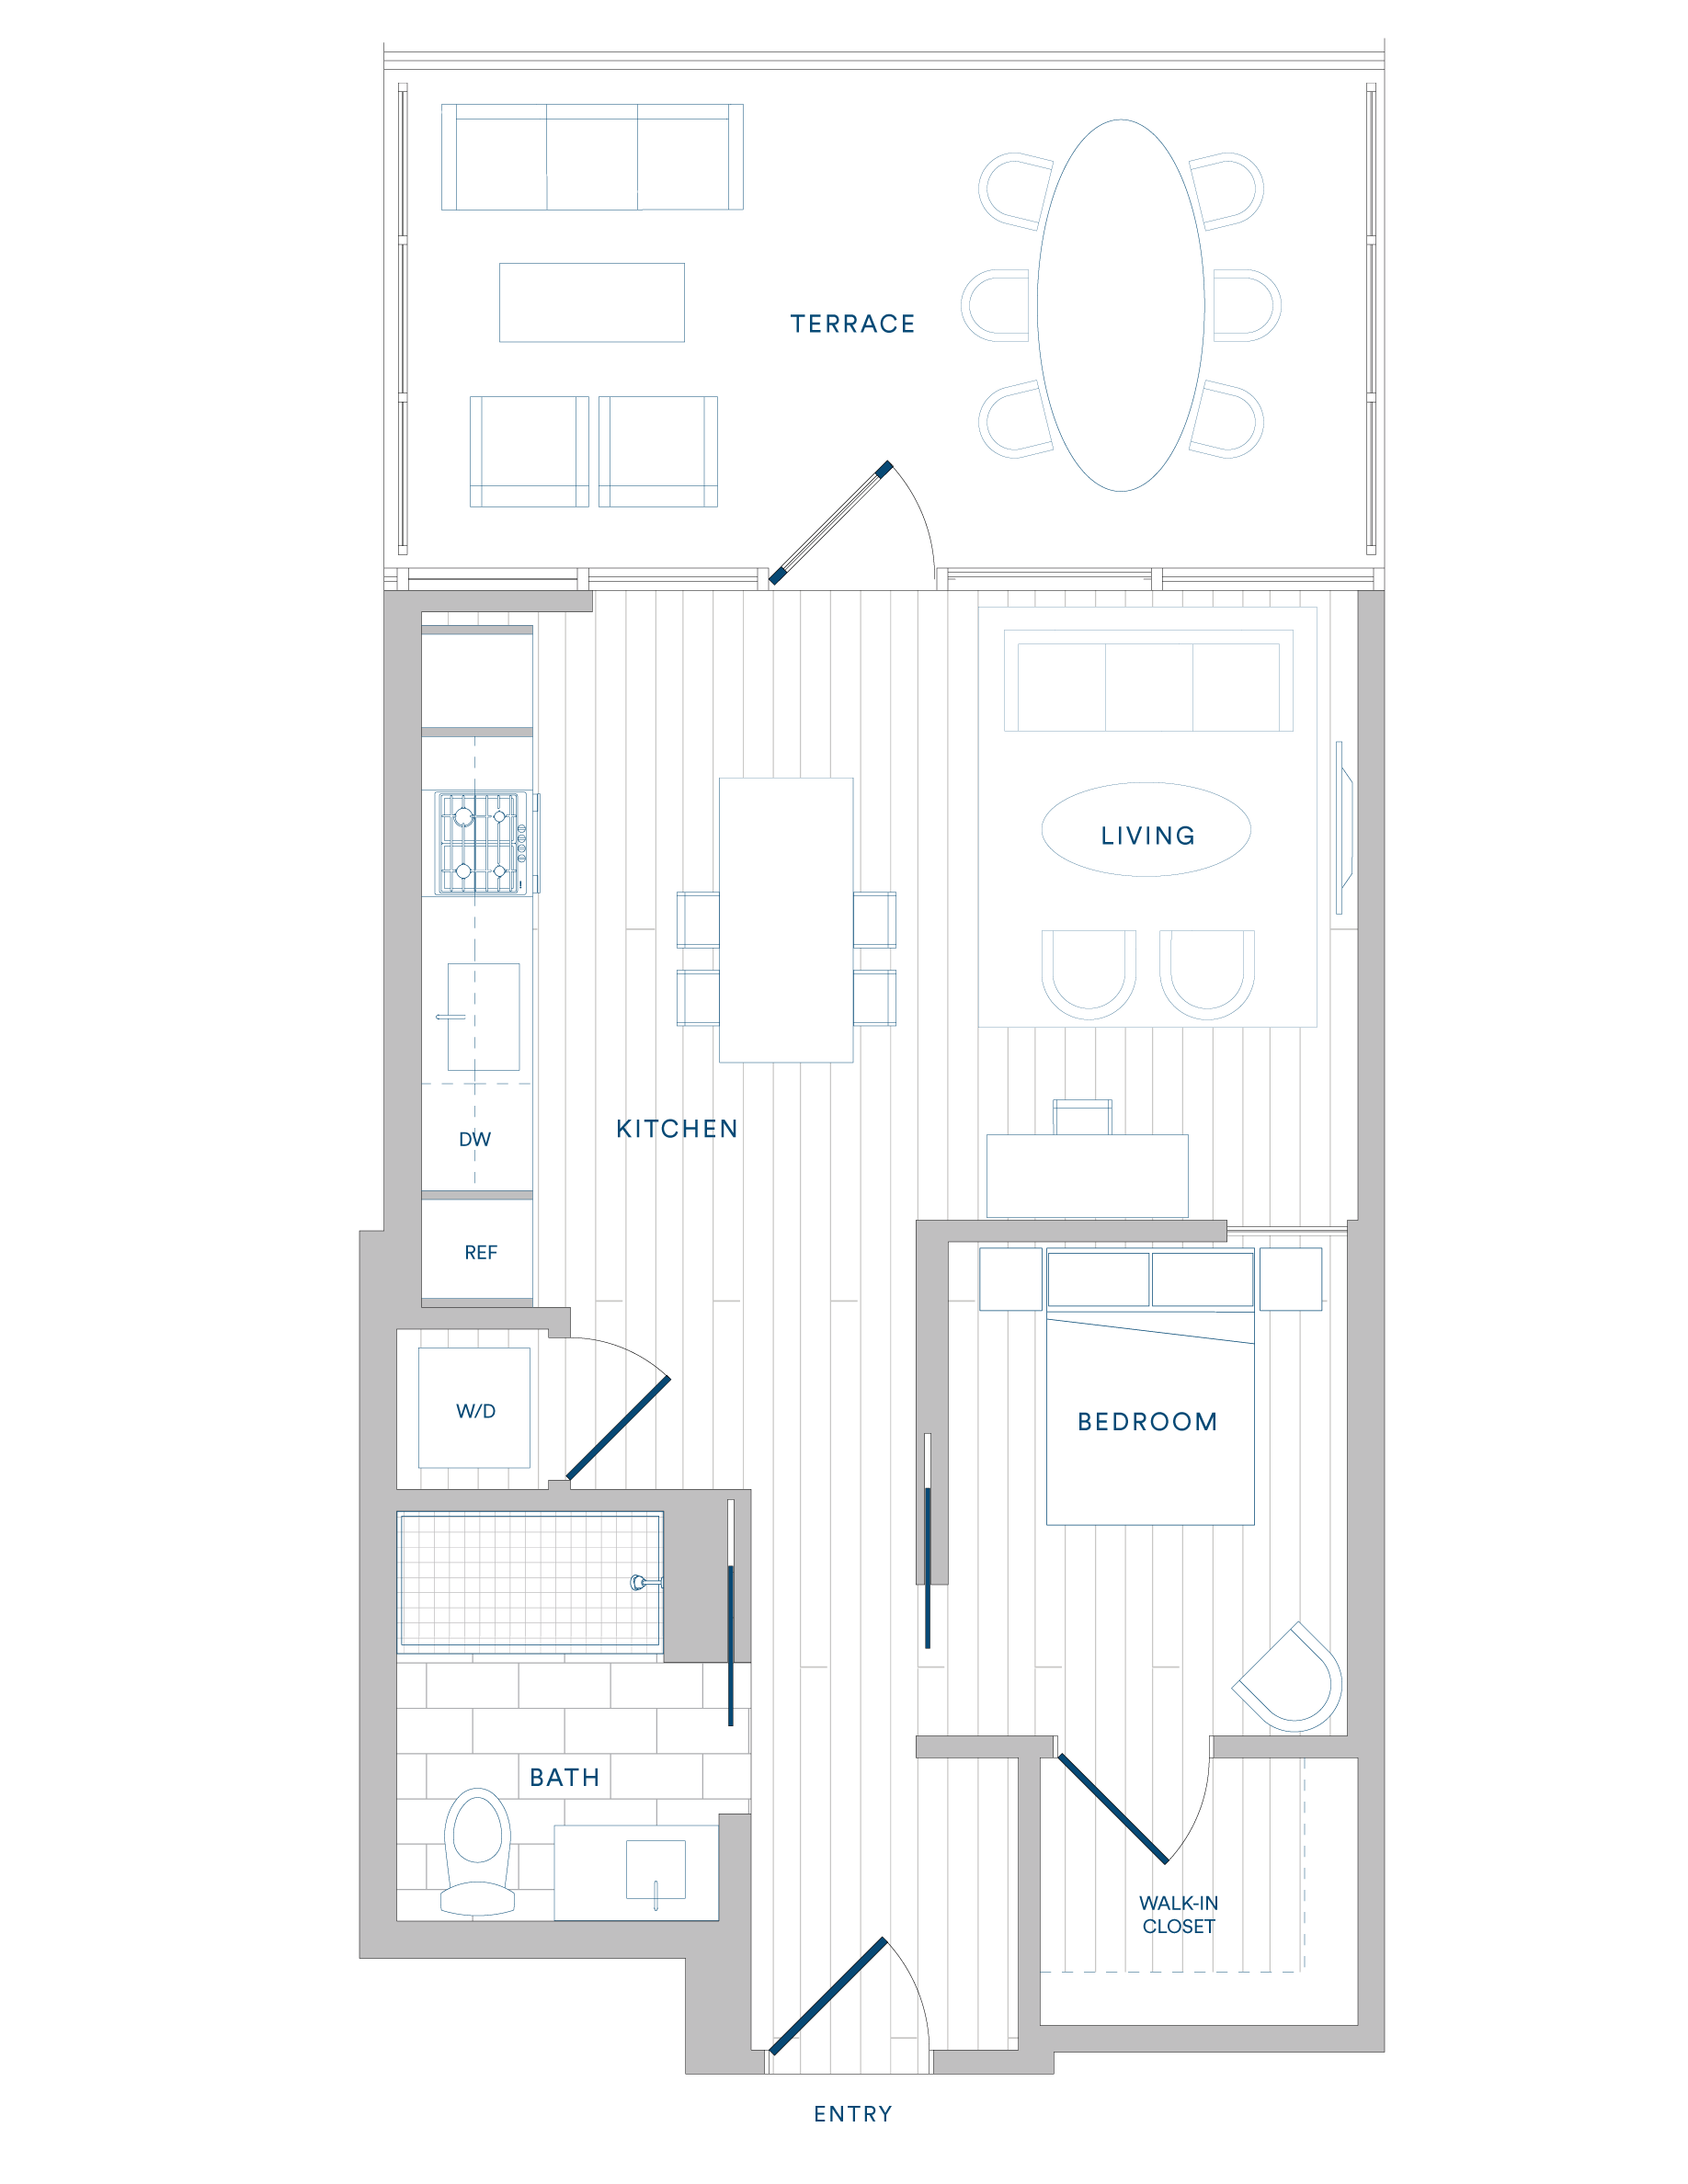 Floorplan for Apartment #404, 1 bedroom unit at Margarite